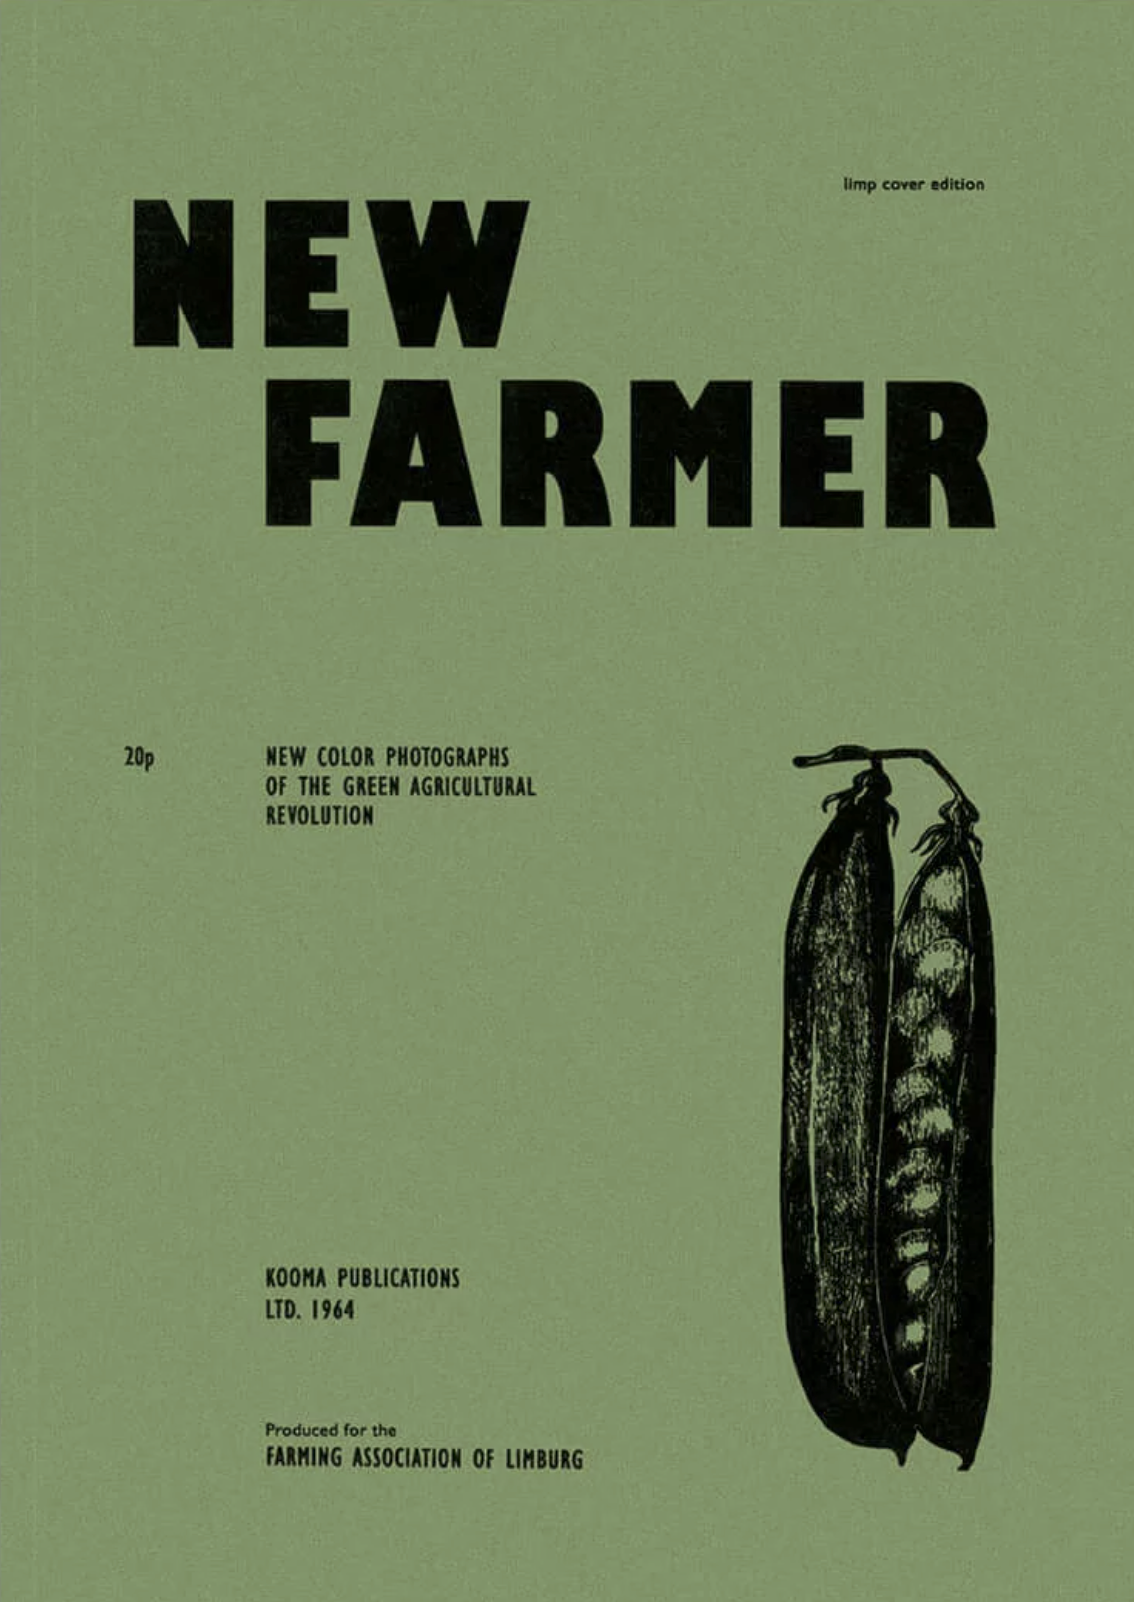 NEW FARMER, Bruce Eesly